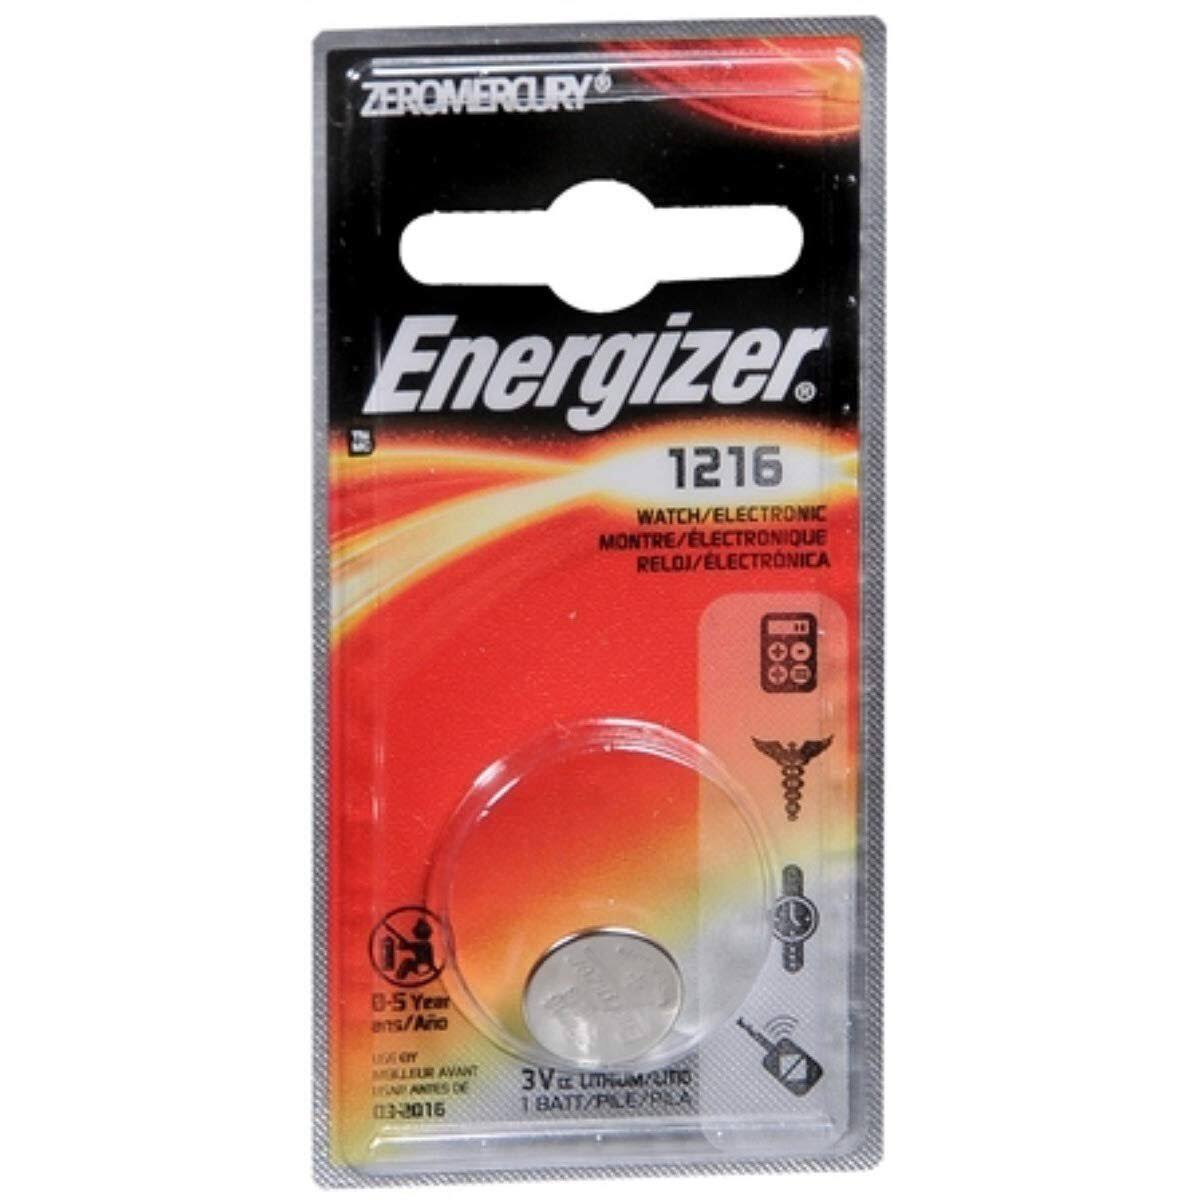 Energizer 1216 Lithium Battery - 3V